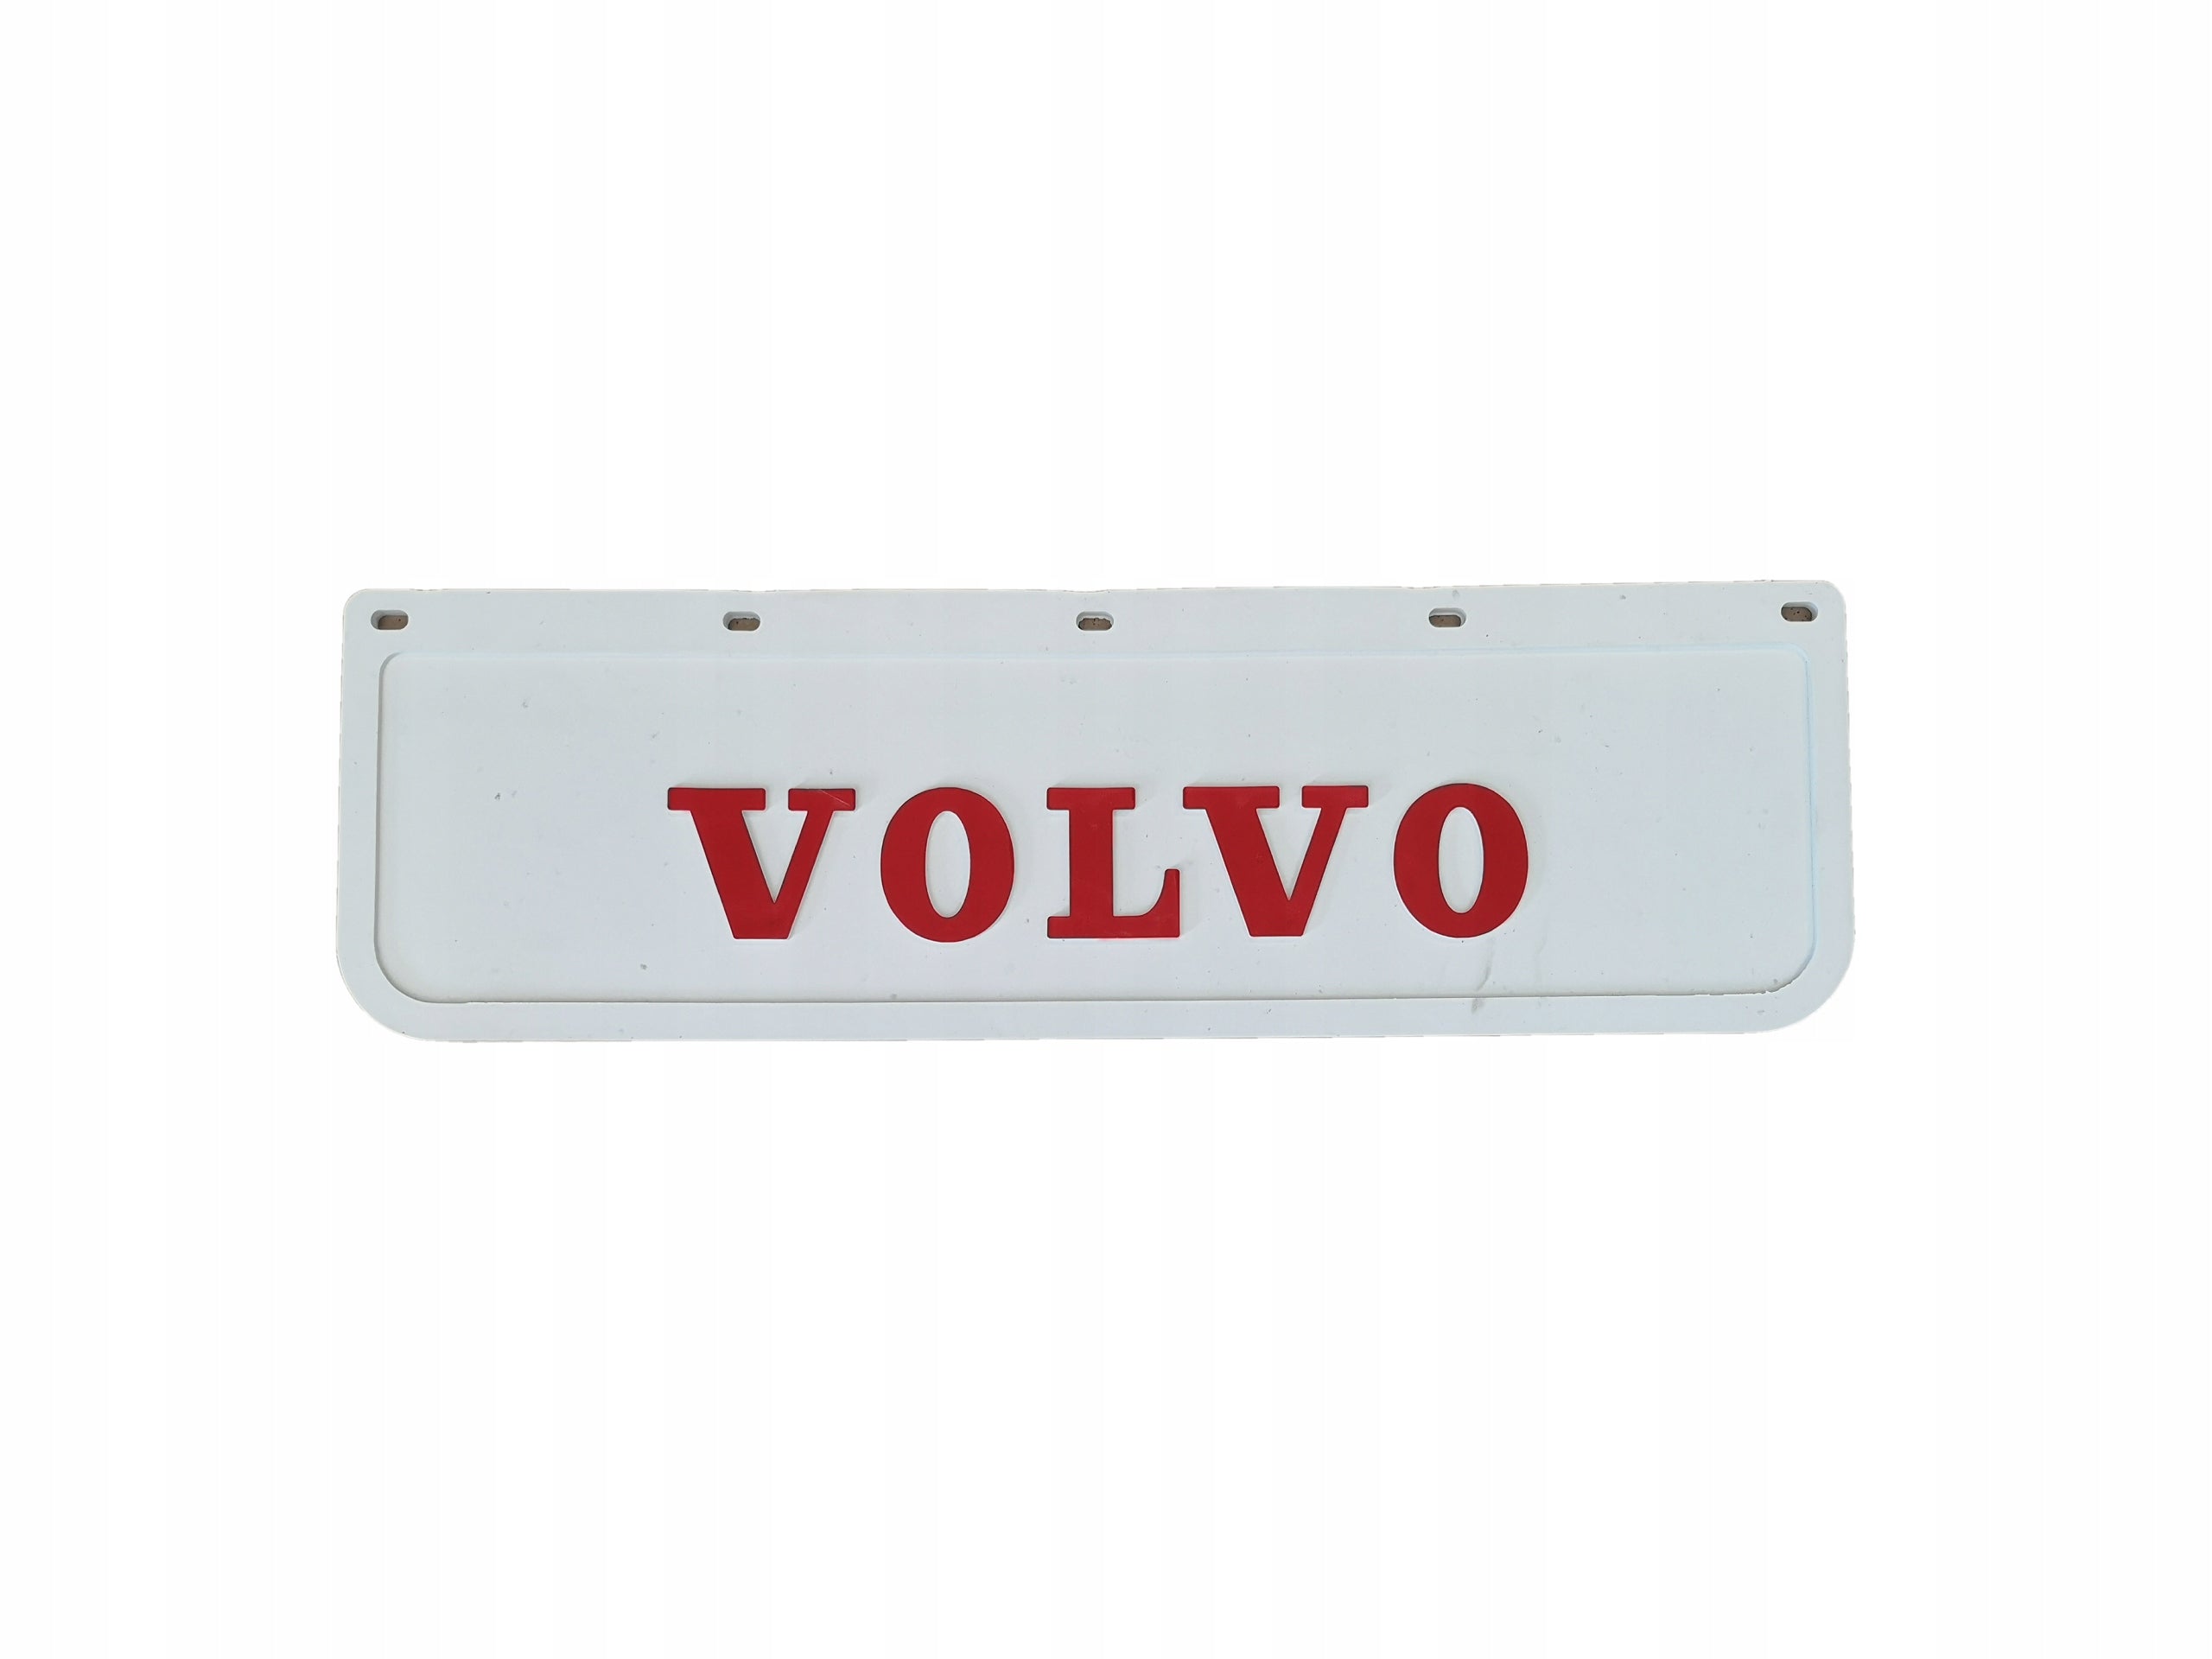 Skvettlapp Volvo, 60x18cm - Hvit